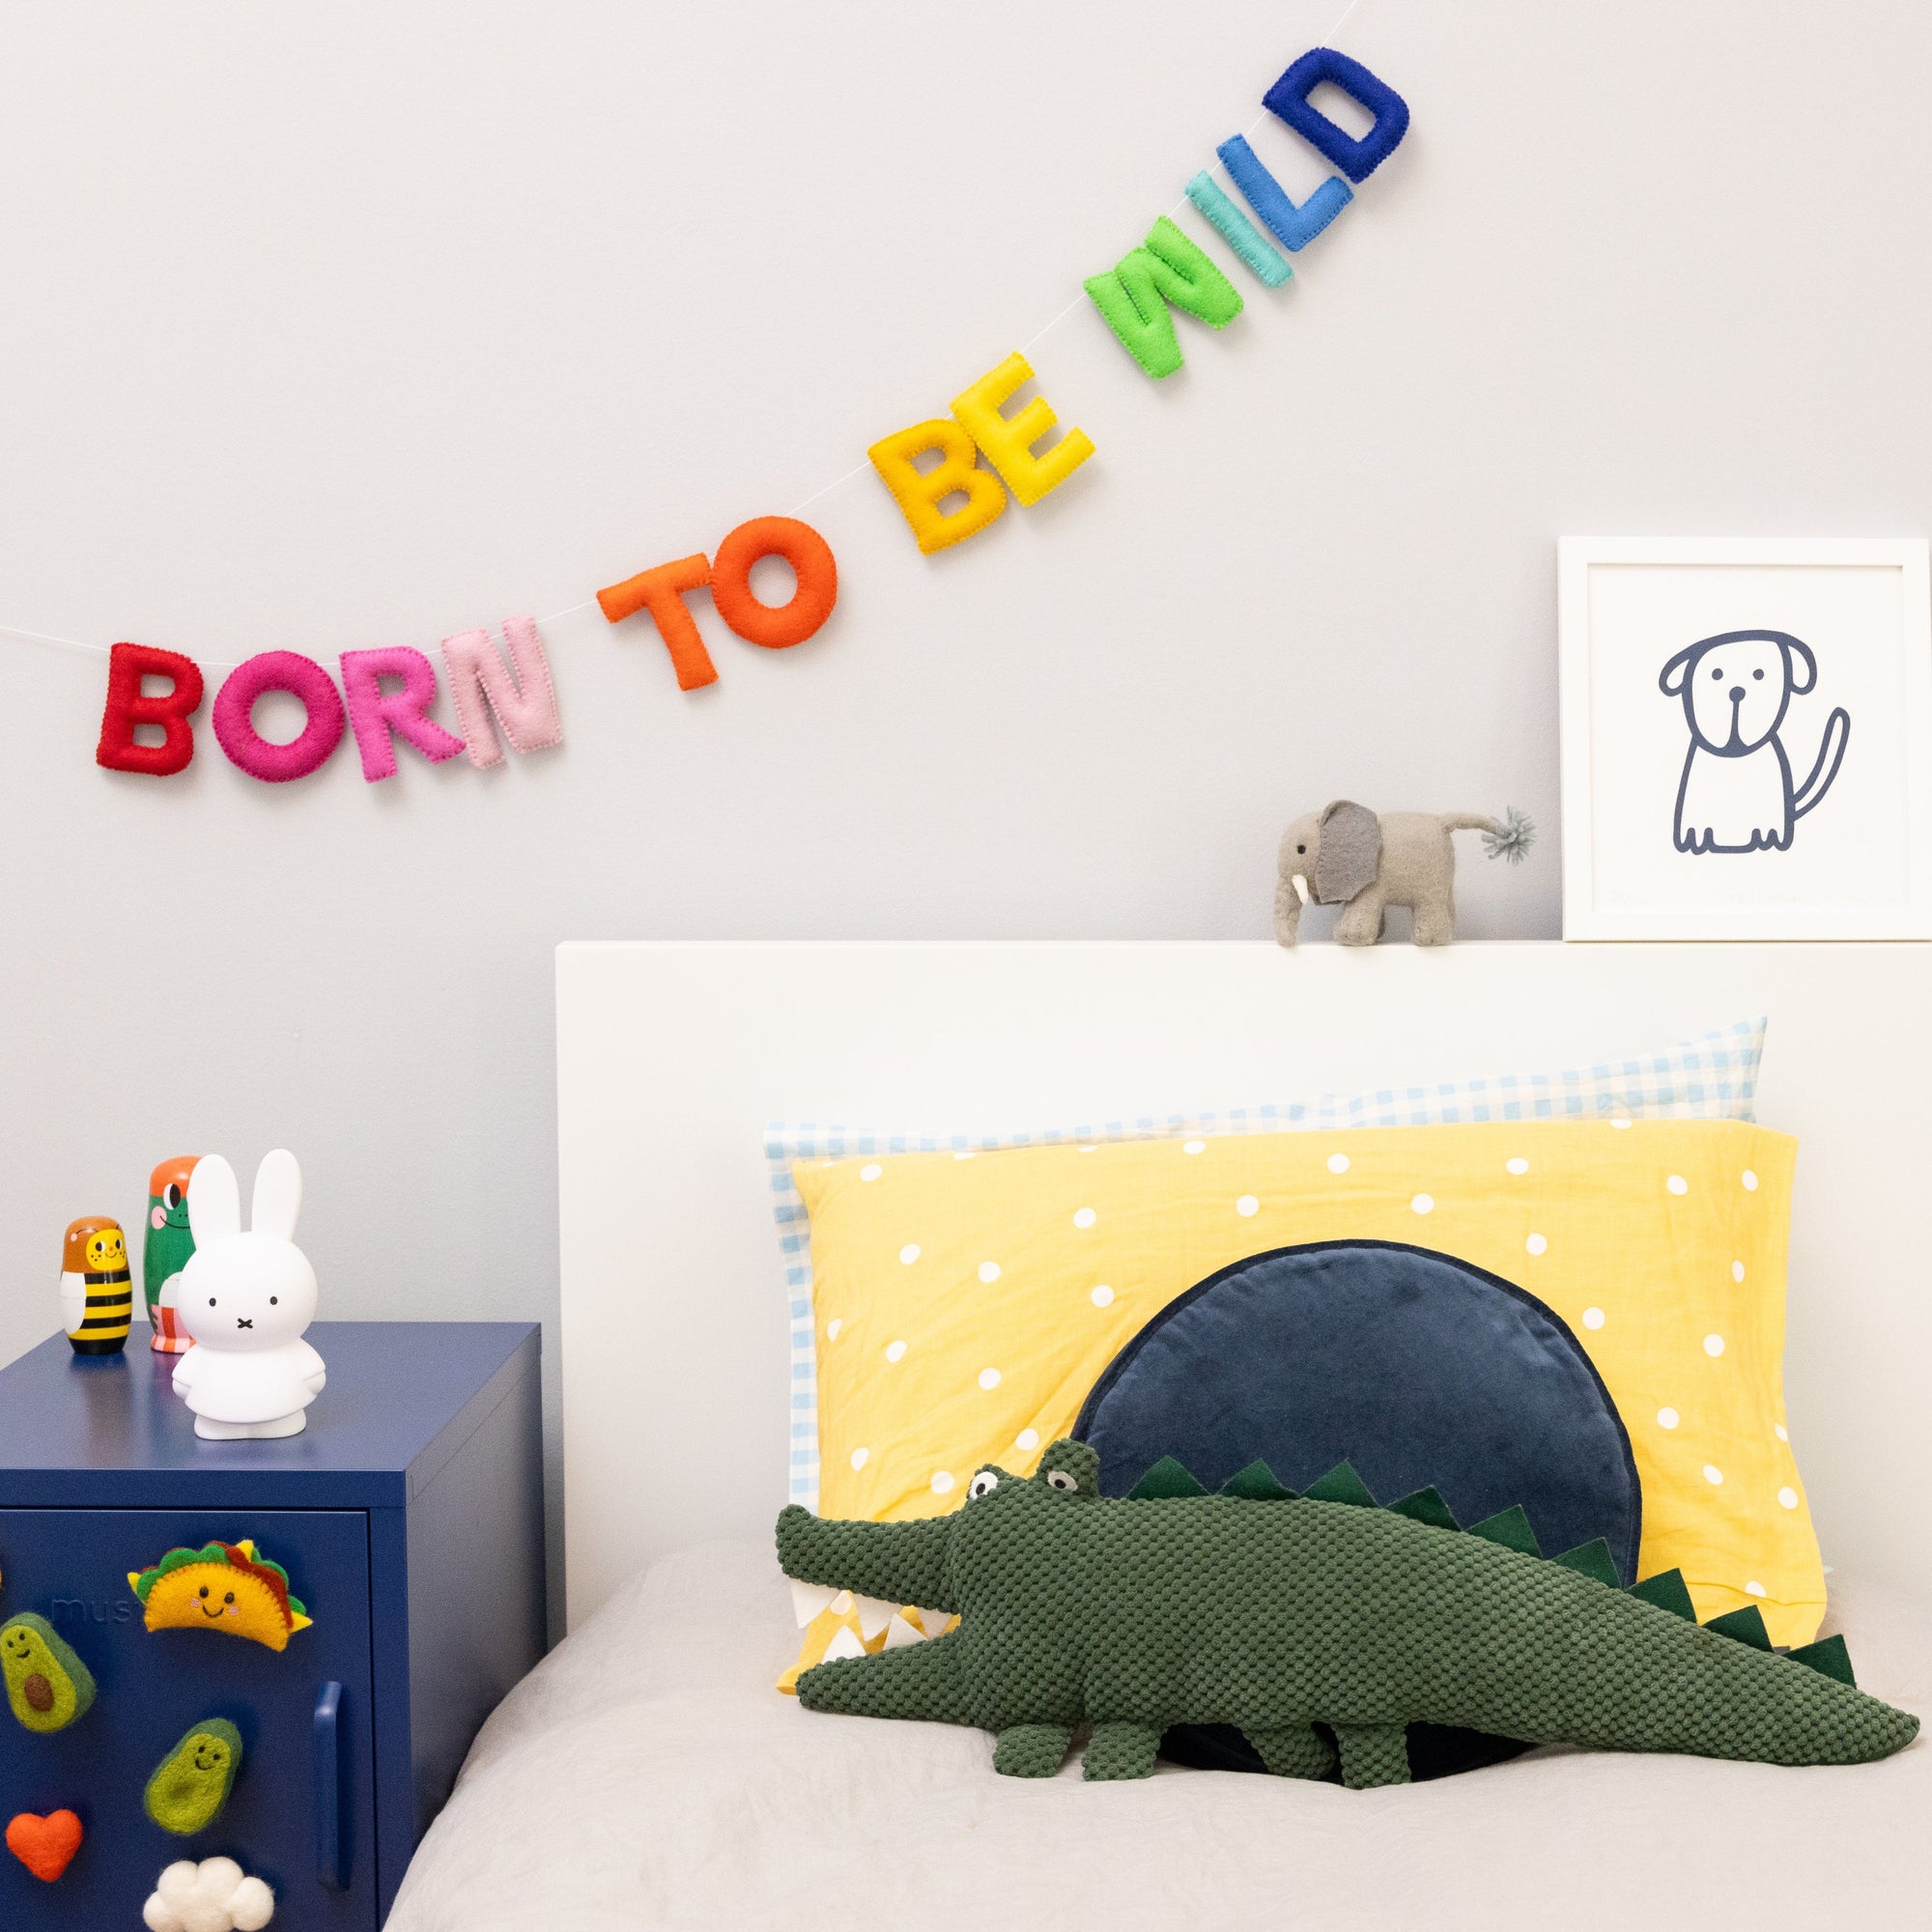 Born to be wild Garland - Rainbow-Fun-Little Fish Co.